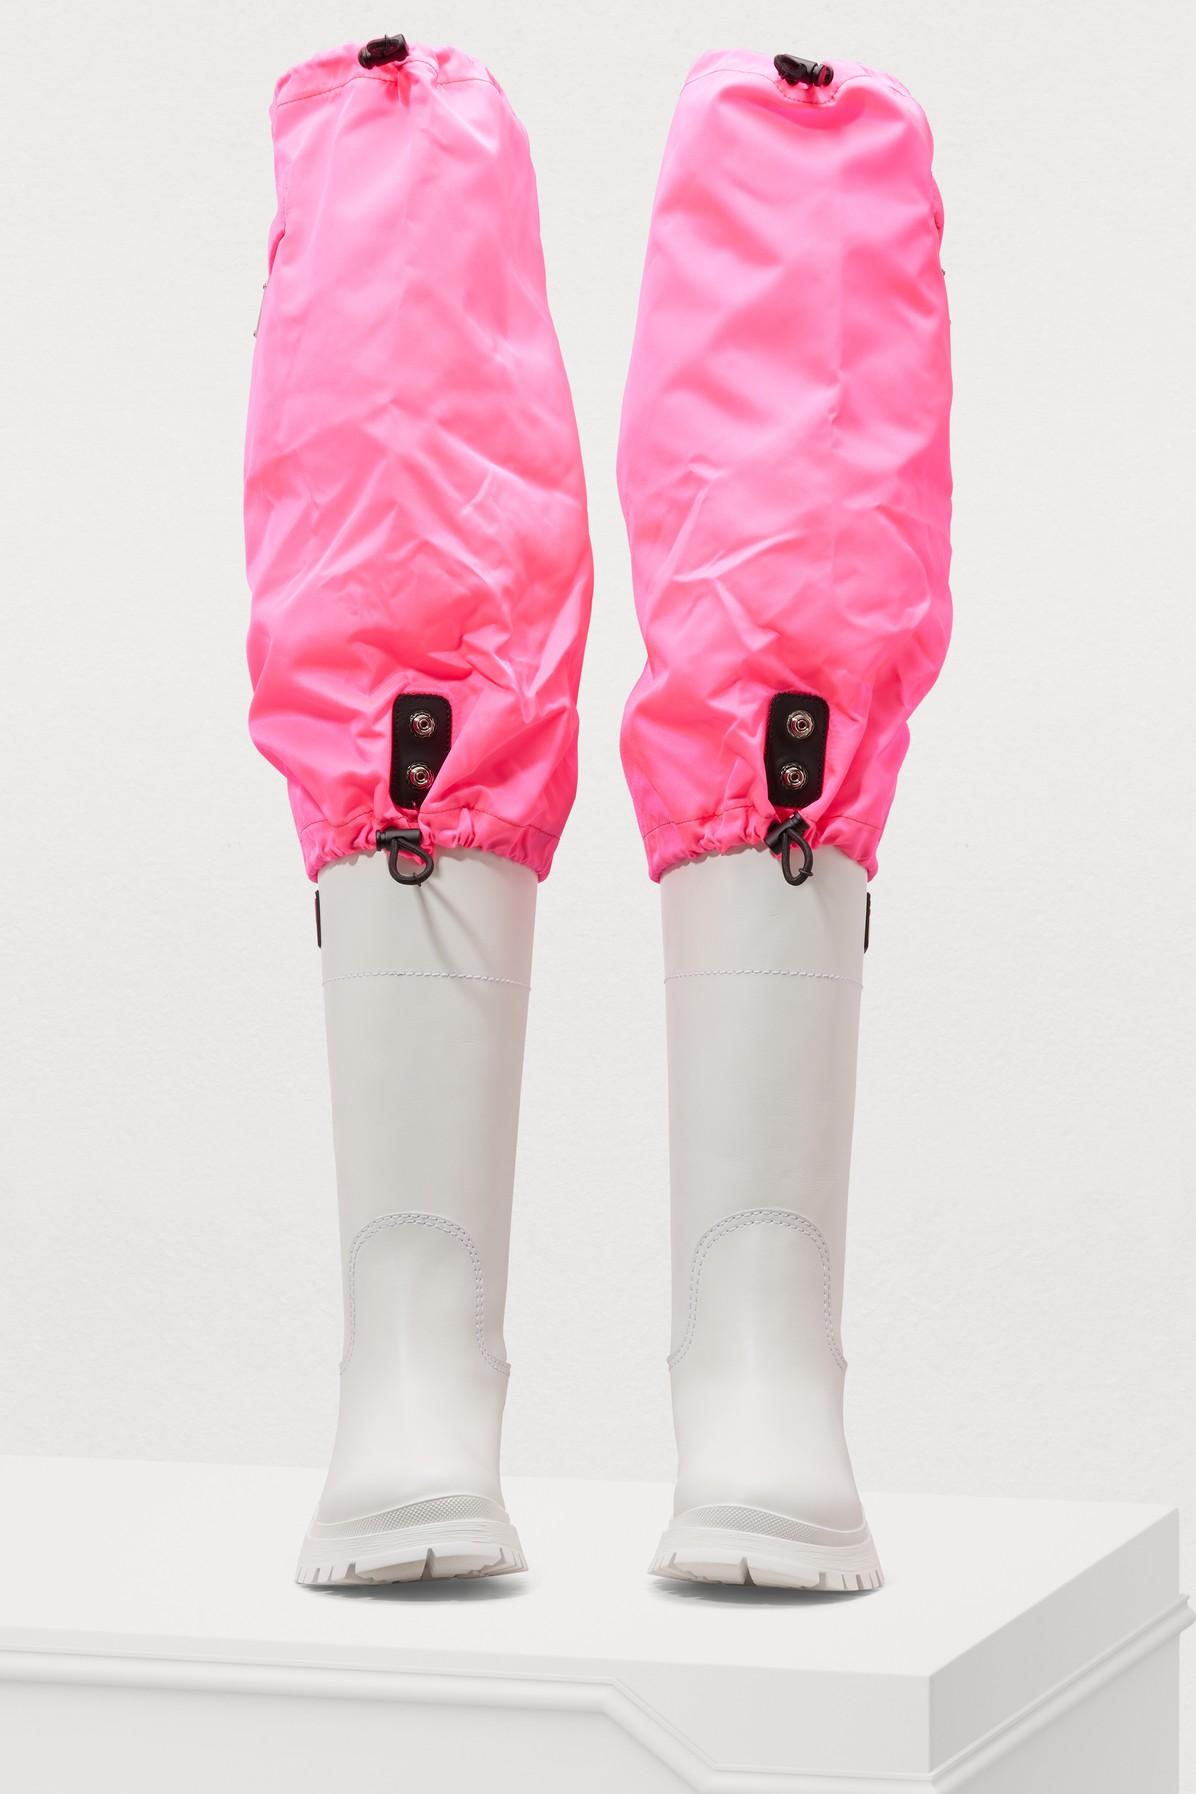 prada boots white and pink